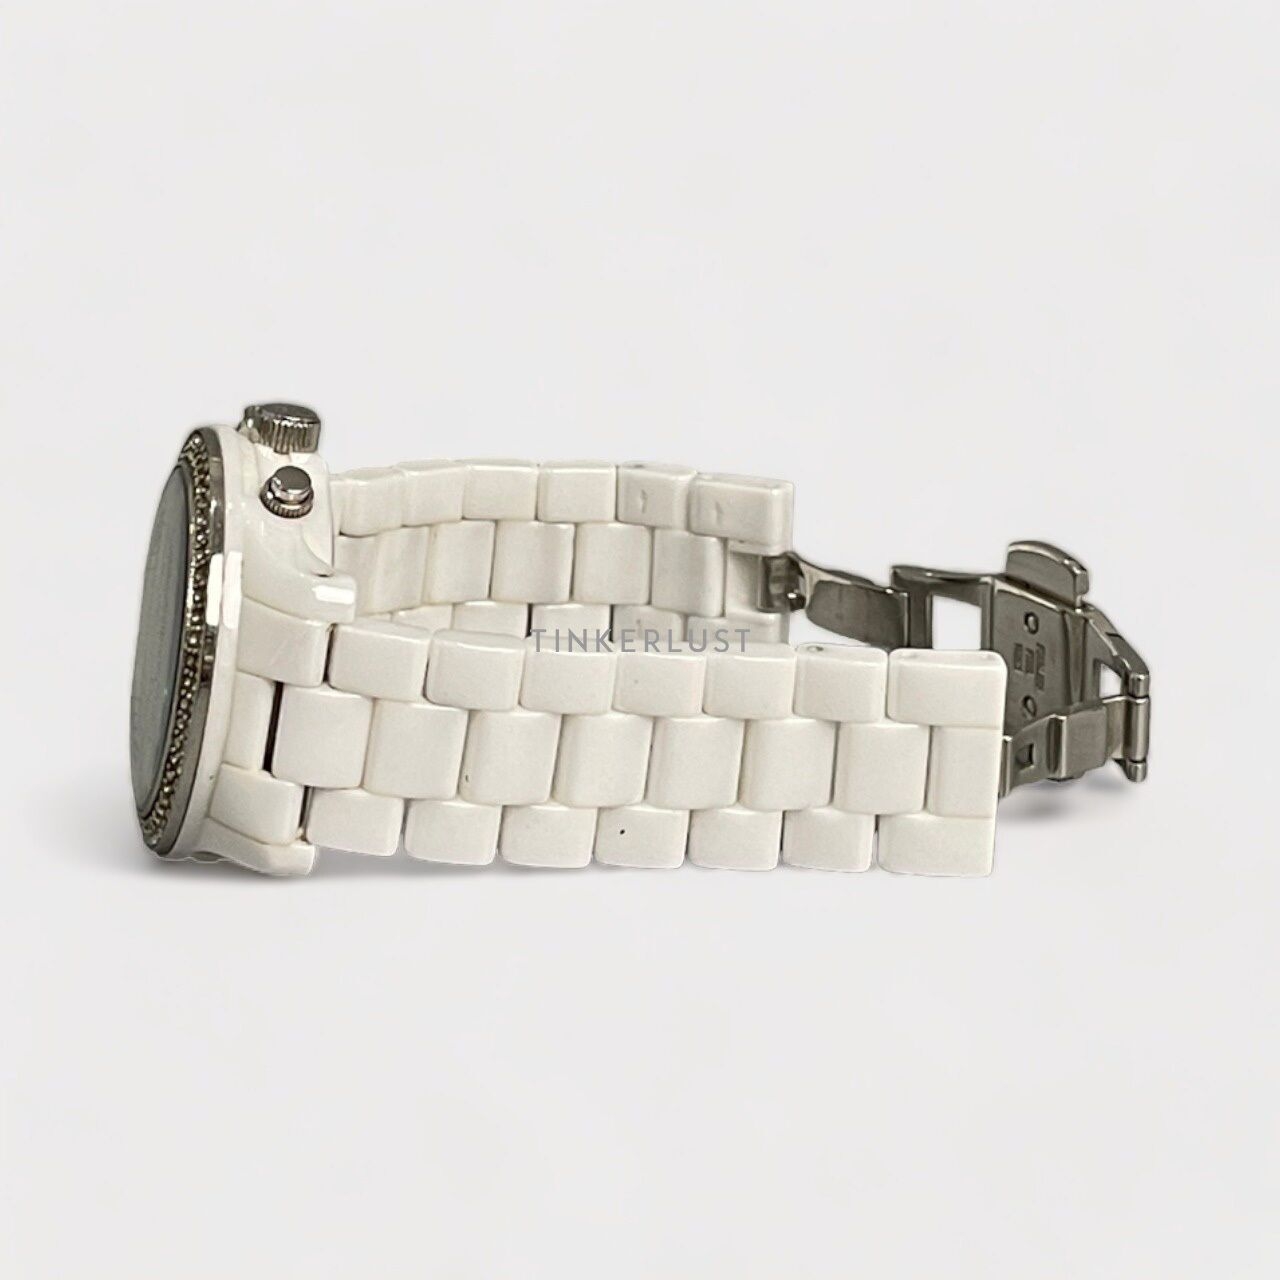 Michael Kors White Ceramic And Bracelet Watch